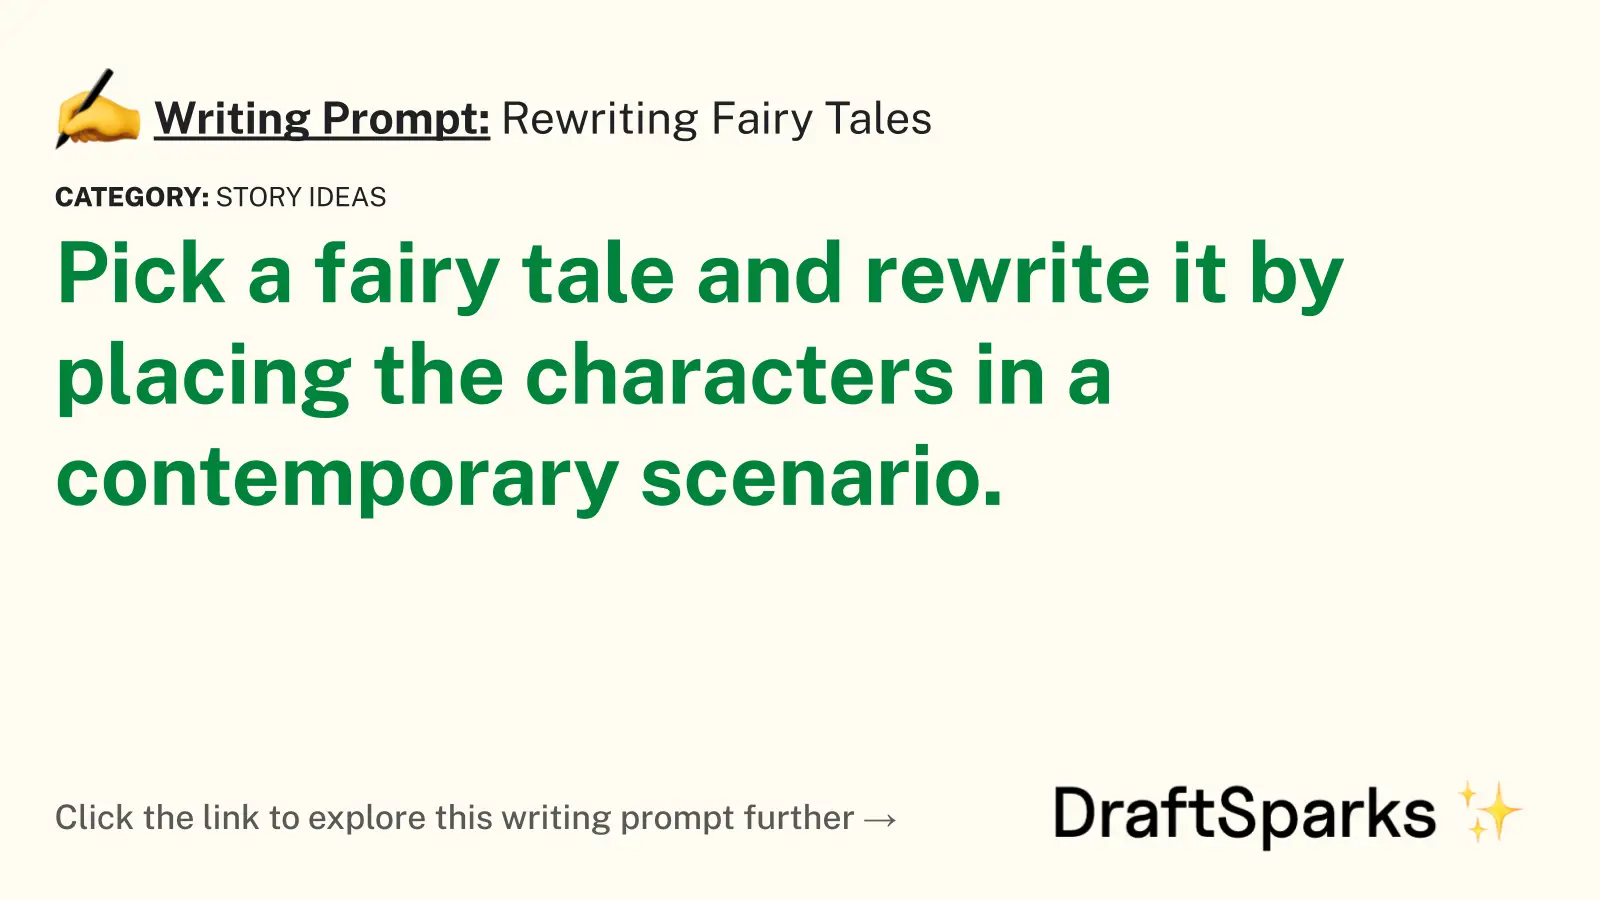 Rewriting Fairy Tales